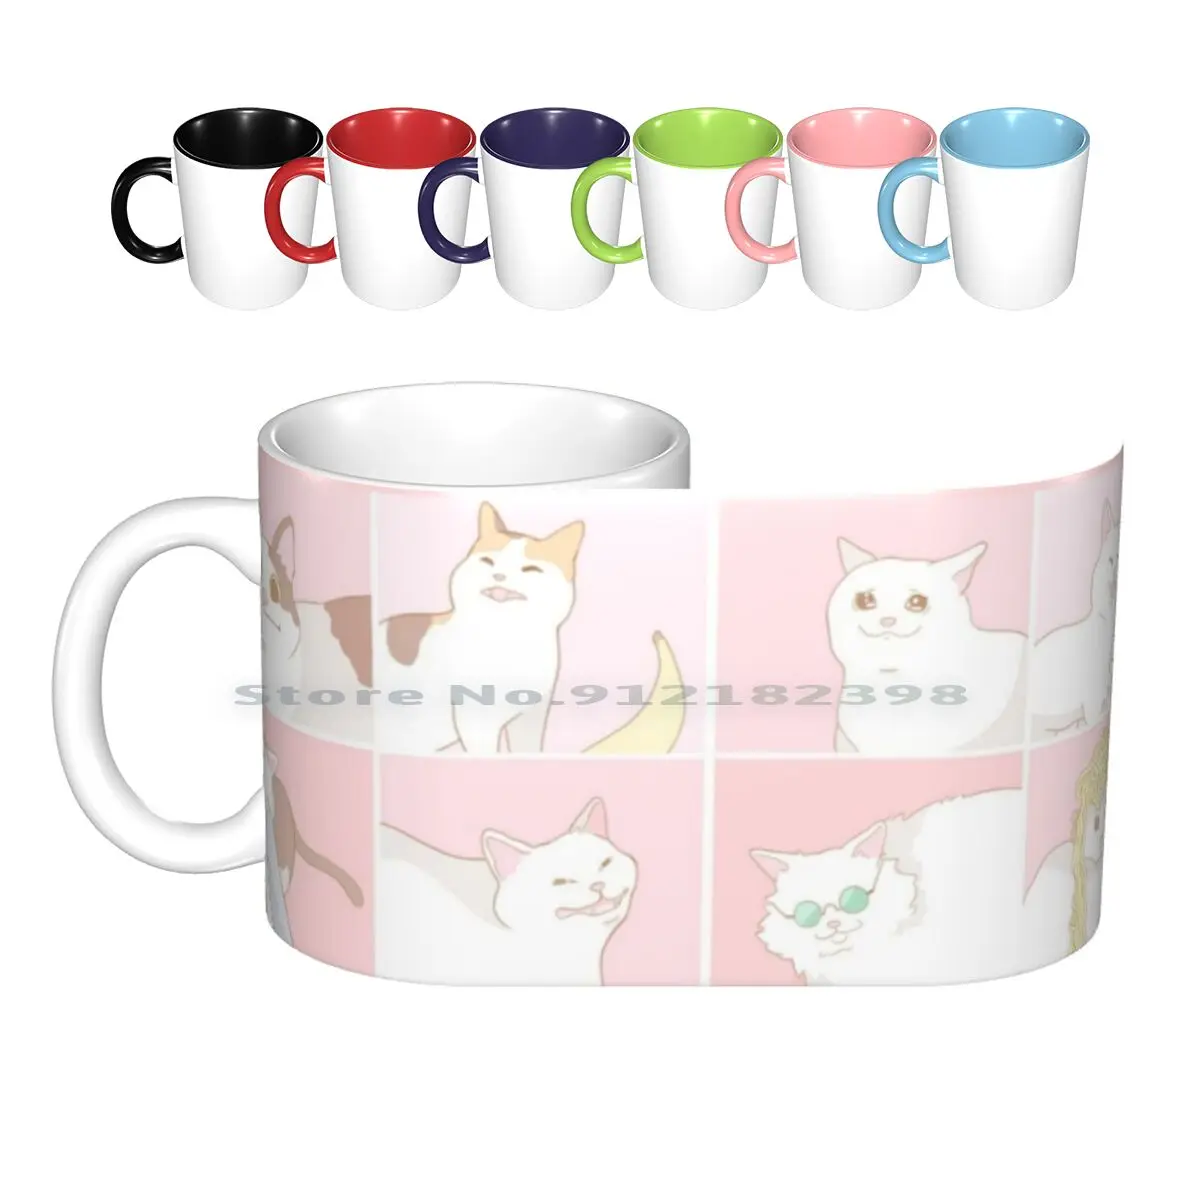 

Meme Cats Ceramic Mugs Coffee Cups Milk Tea Mug Meme Cats Memes Cat Pastel Pastel Pink Angry Cat No Banana Aesthetic Creative